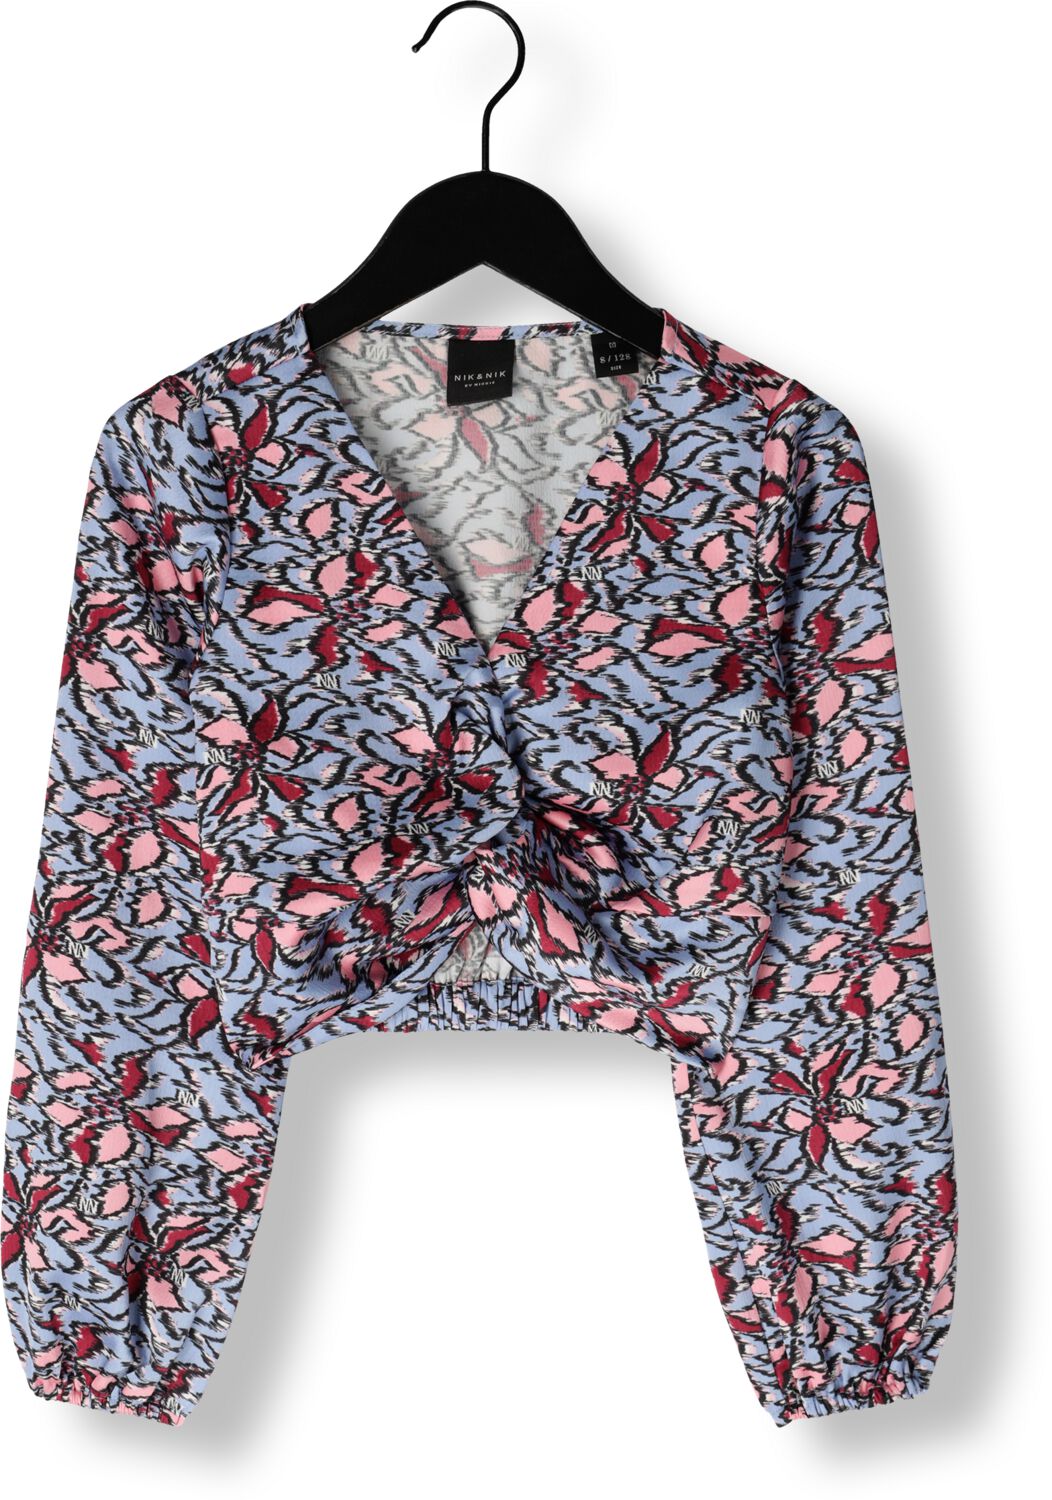 NIK&NIK top Sumi met all over print zachtblauw roze donkerrood Meisjes Polyester V-hals 128